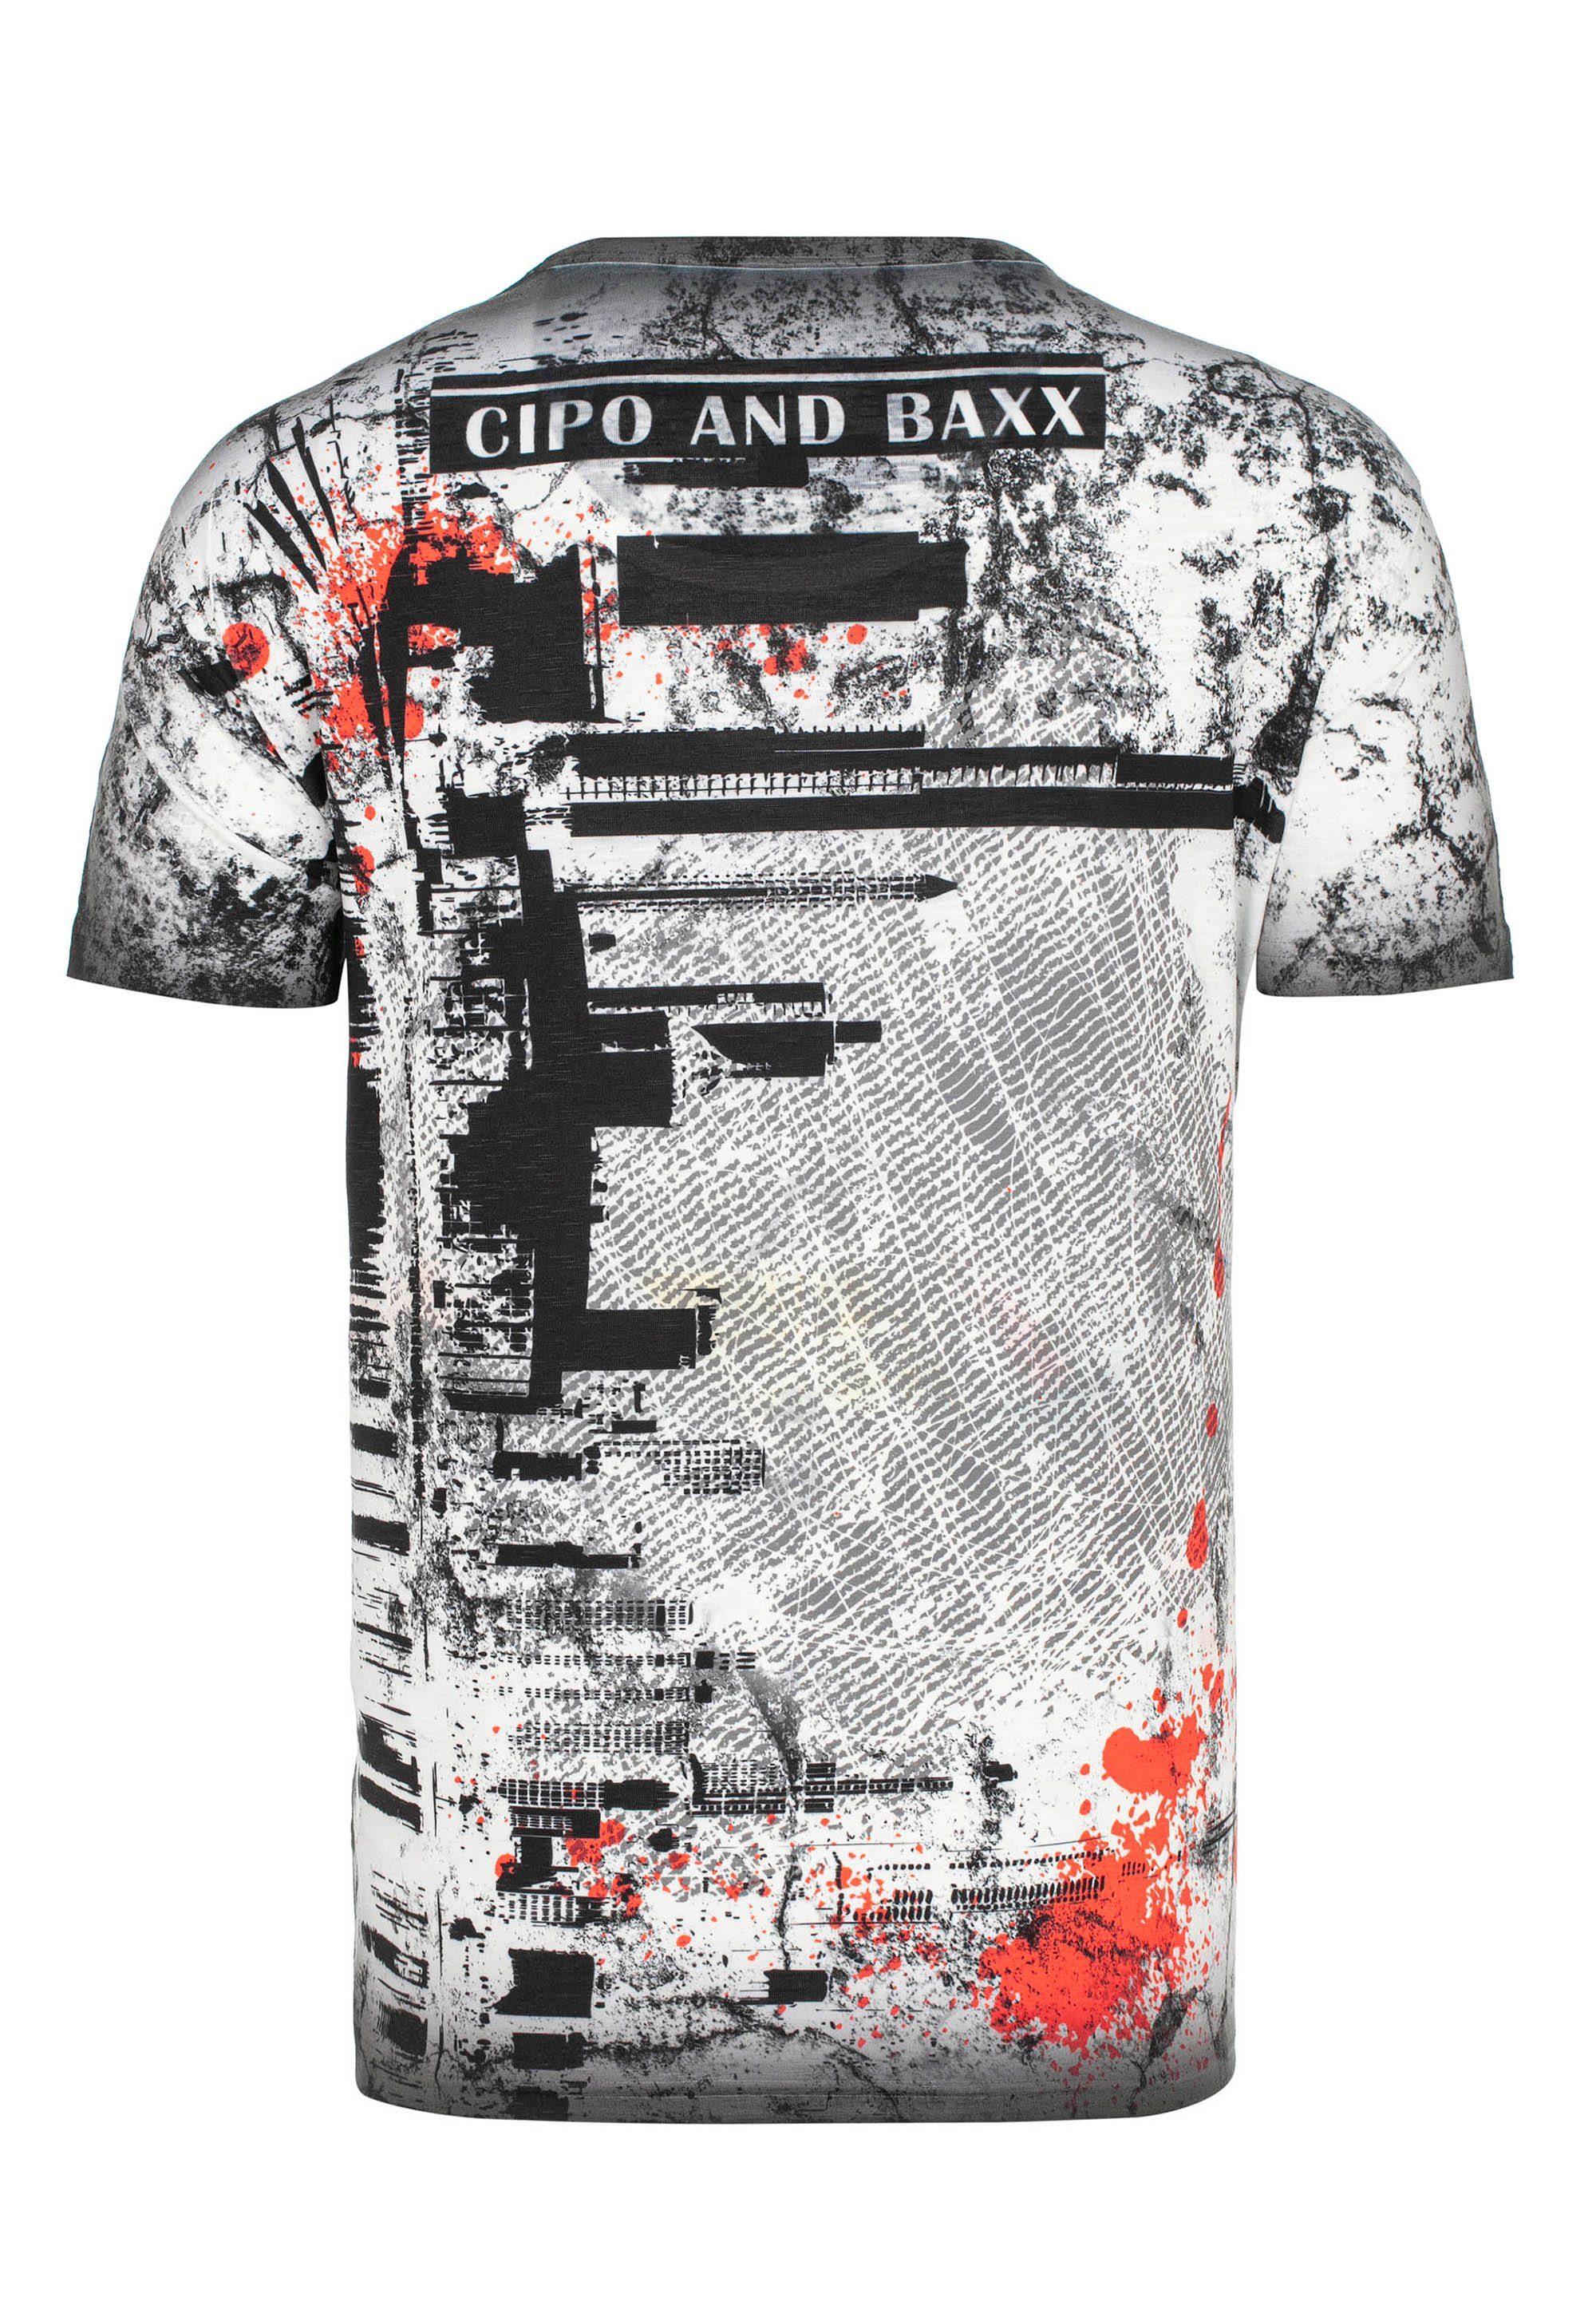 T-Shirt CT628 mit coolem Baxx Cipo Allover-Print &